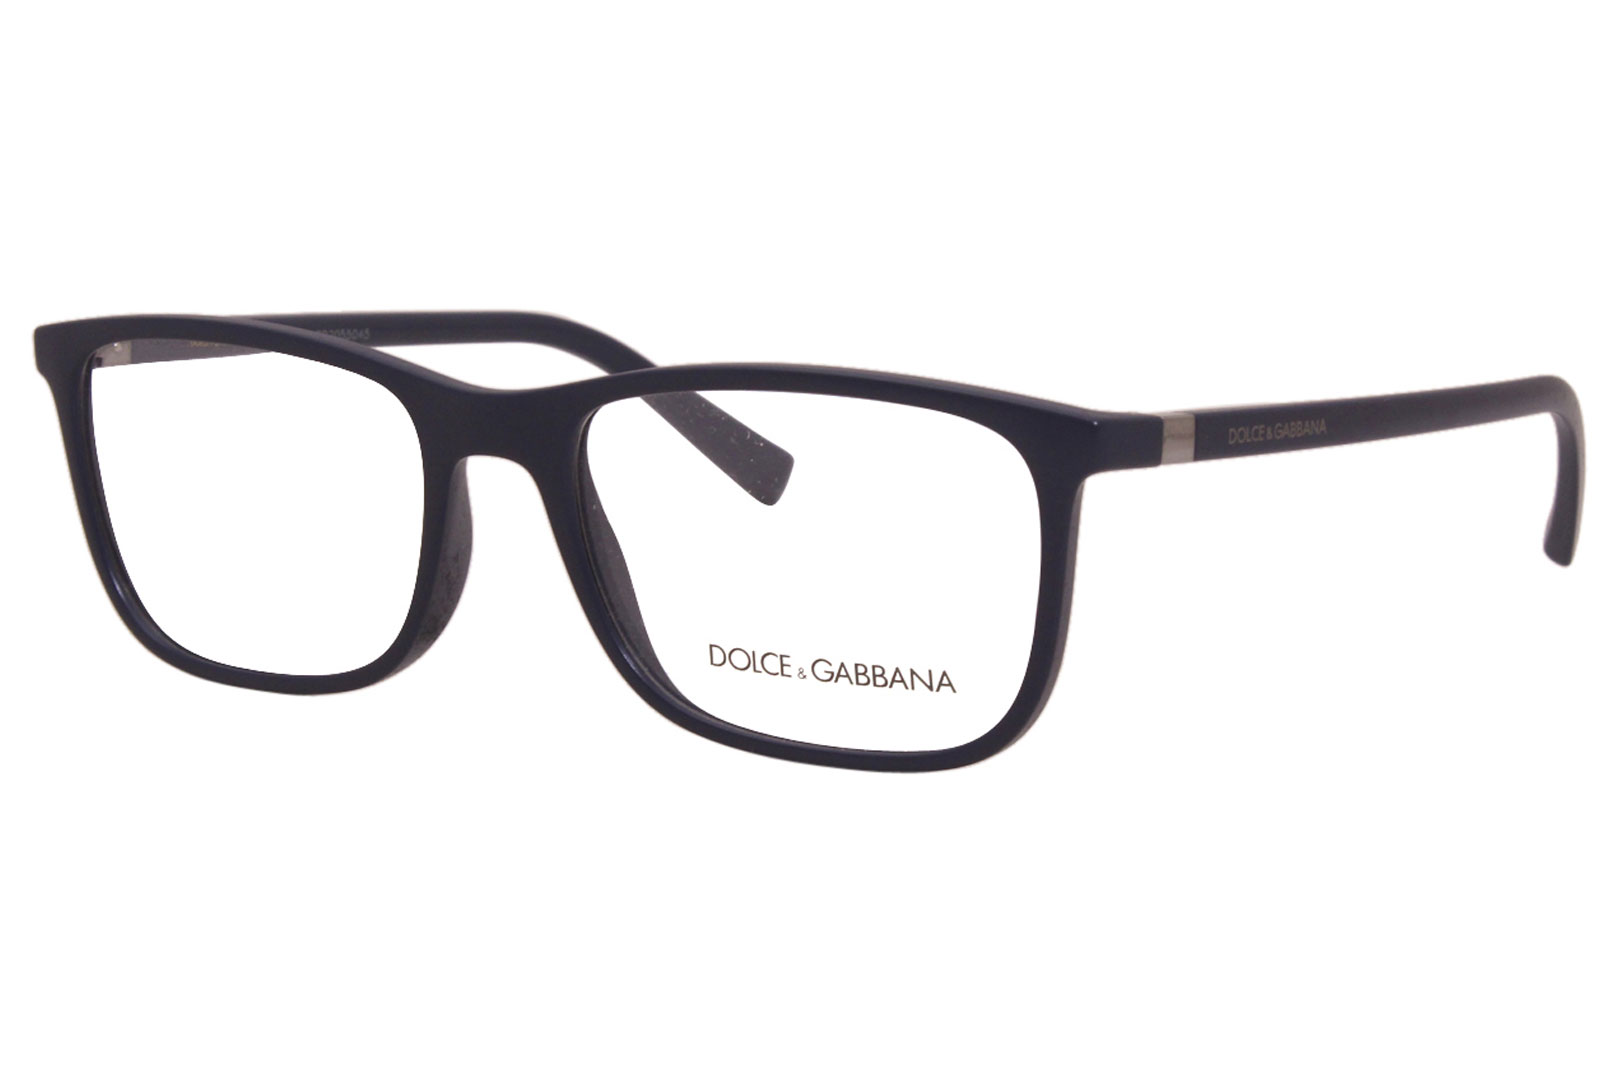 EAN 8053672956160 product image for Dolce & Gabbana Eyeglasses Men's DG5027 3017 Matte Blue/Silver 55 18 140mm - Len | upcitemdb.com